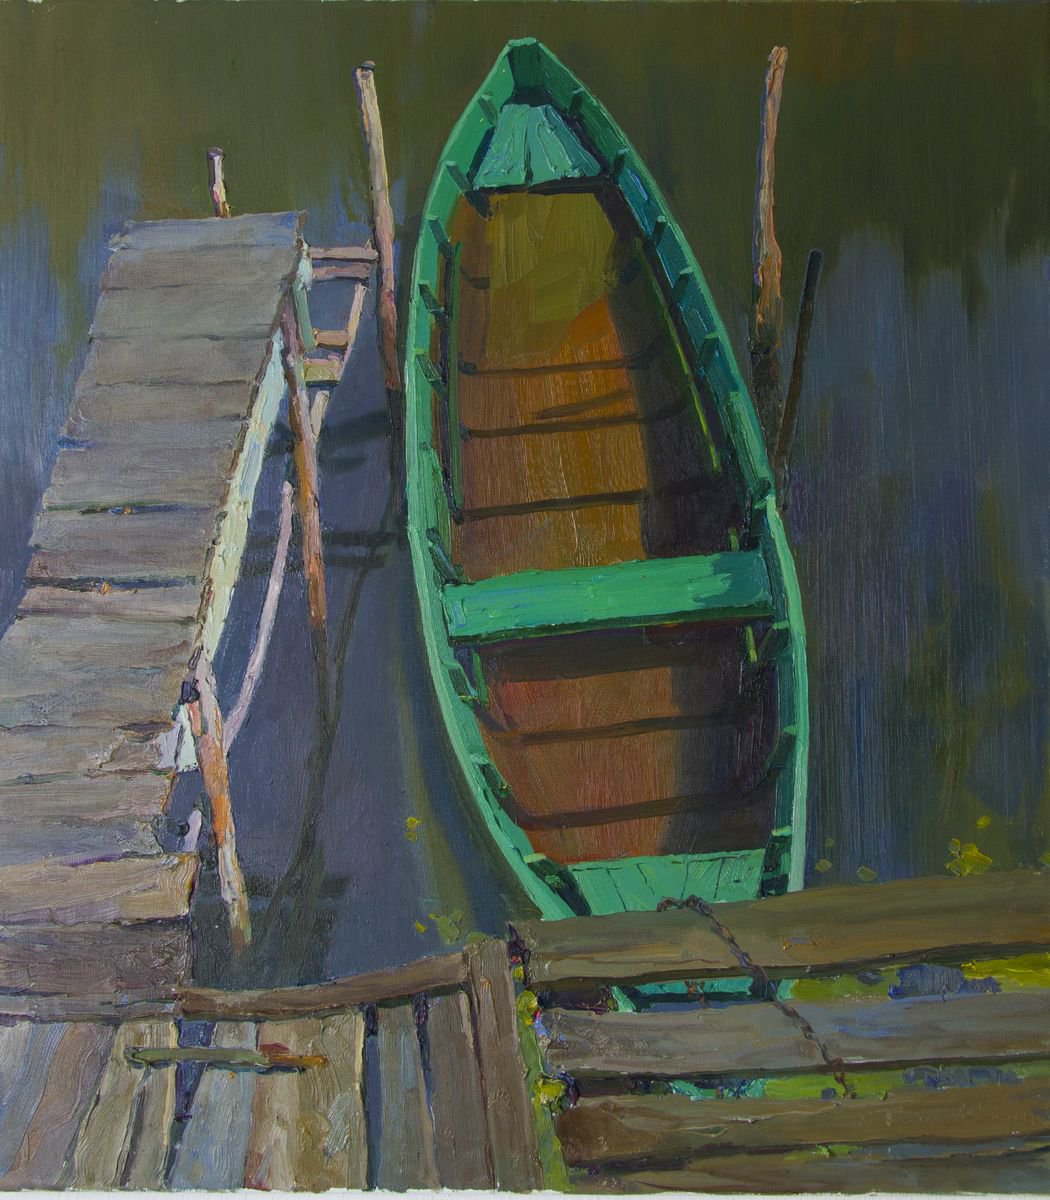 The Amber Boat by Sergey Kostov